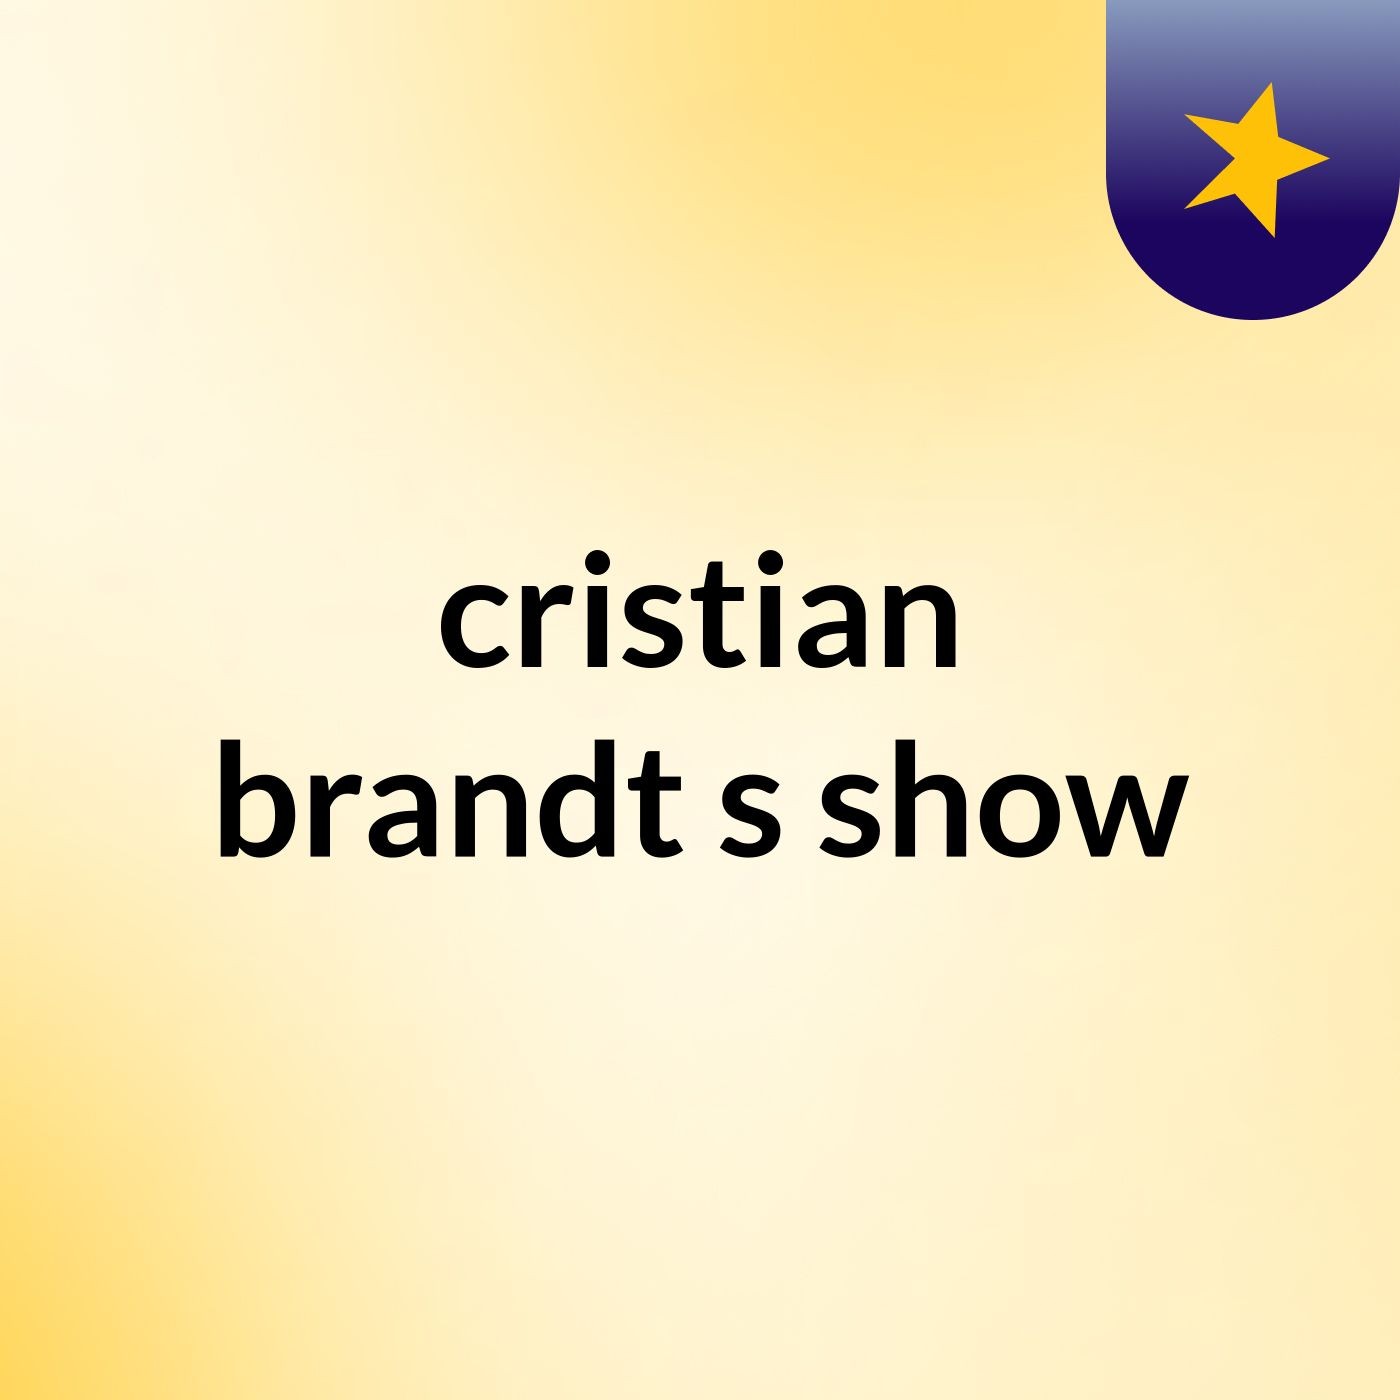 cristian brandt's show